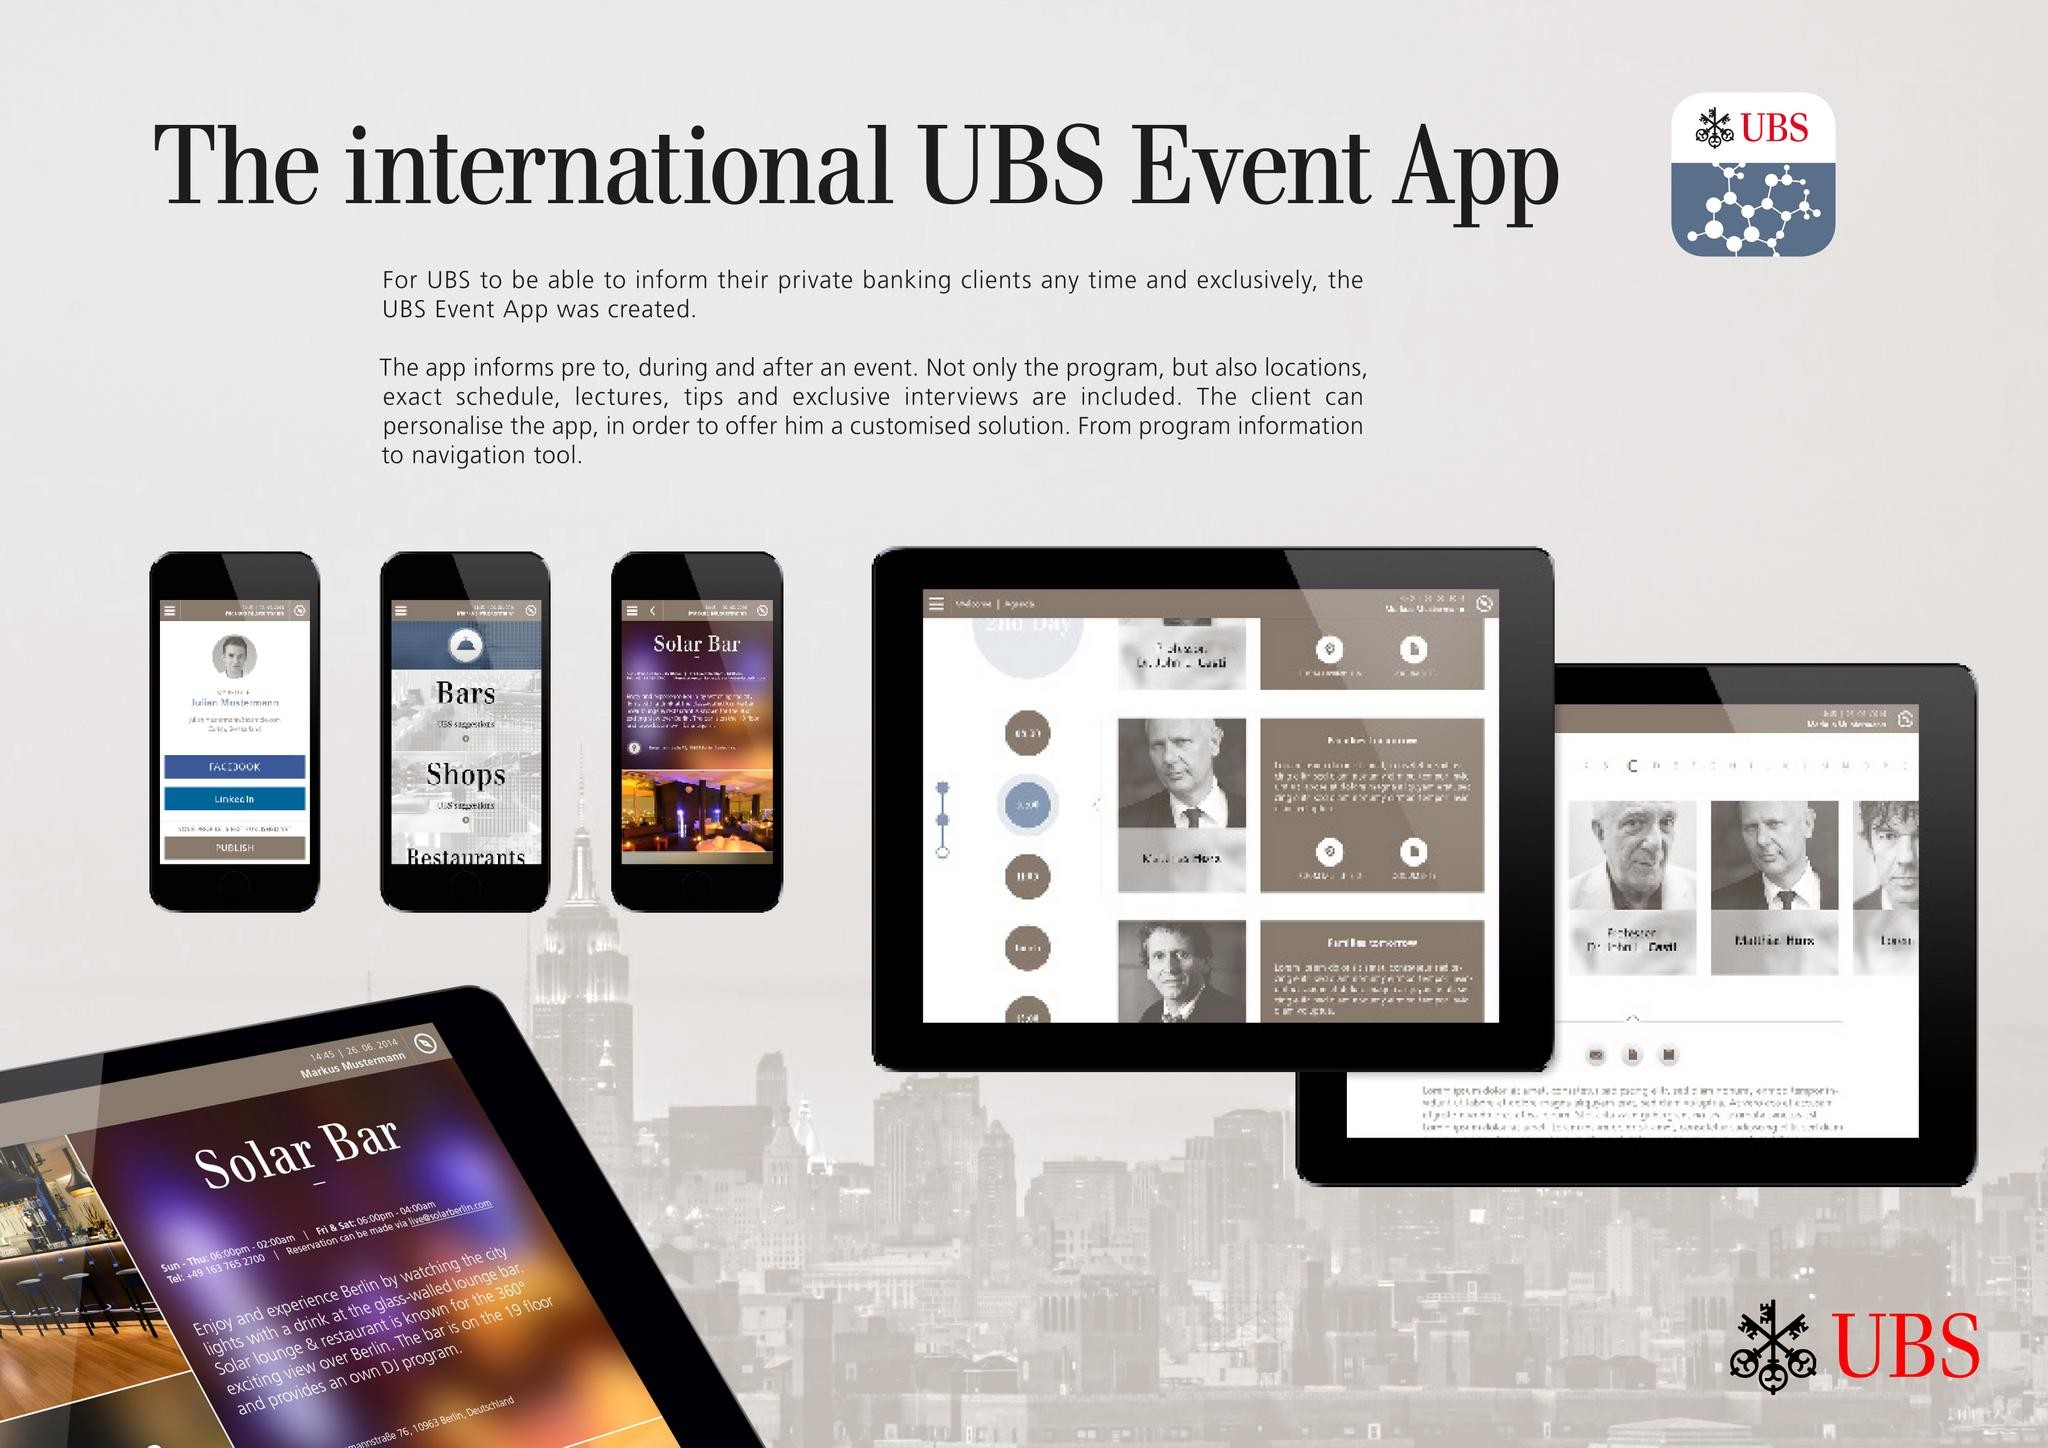 THE INTERNATIONAL UBS EVENT APP